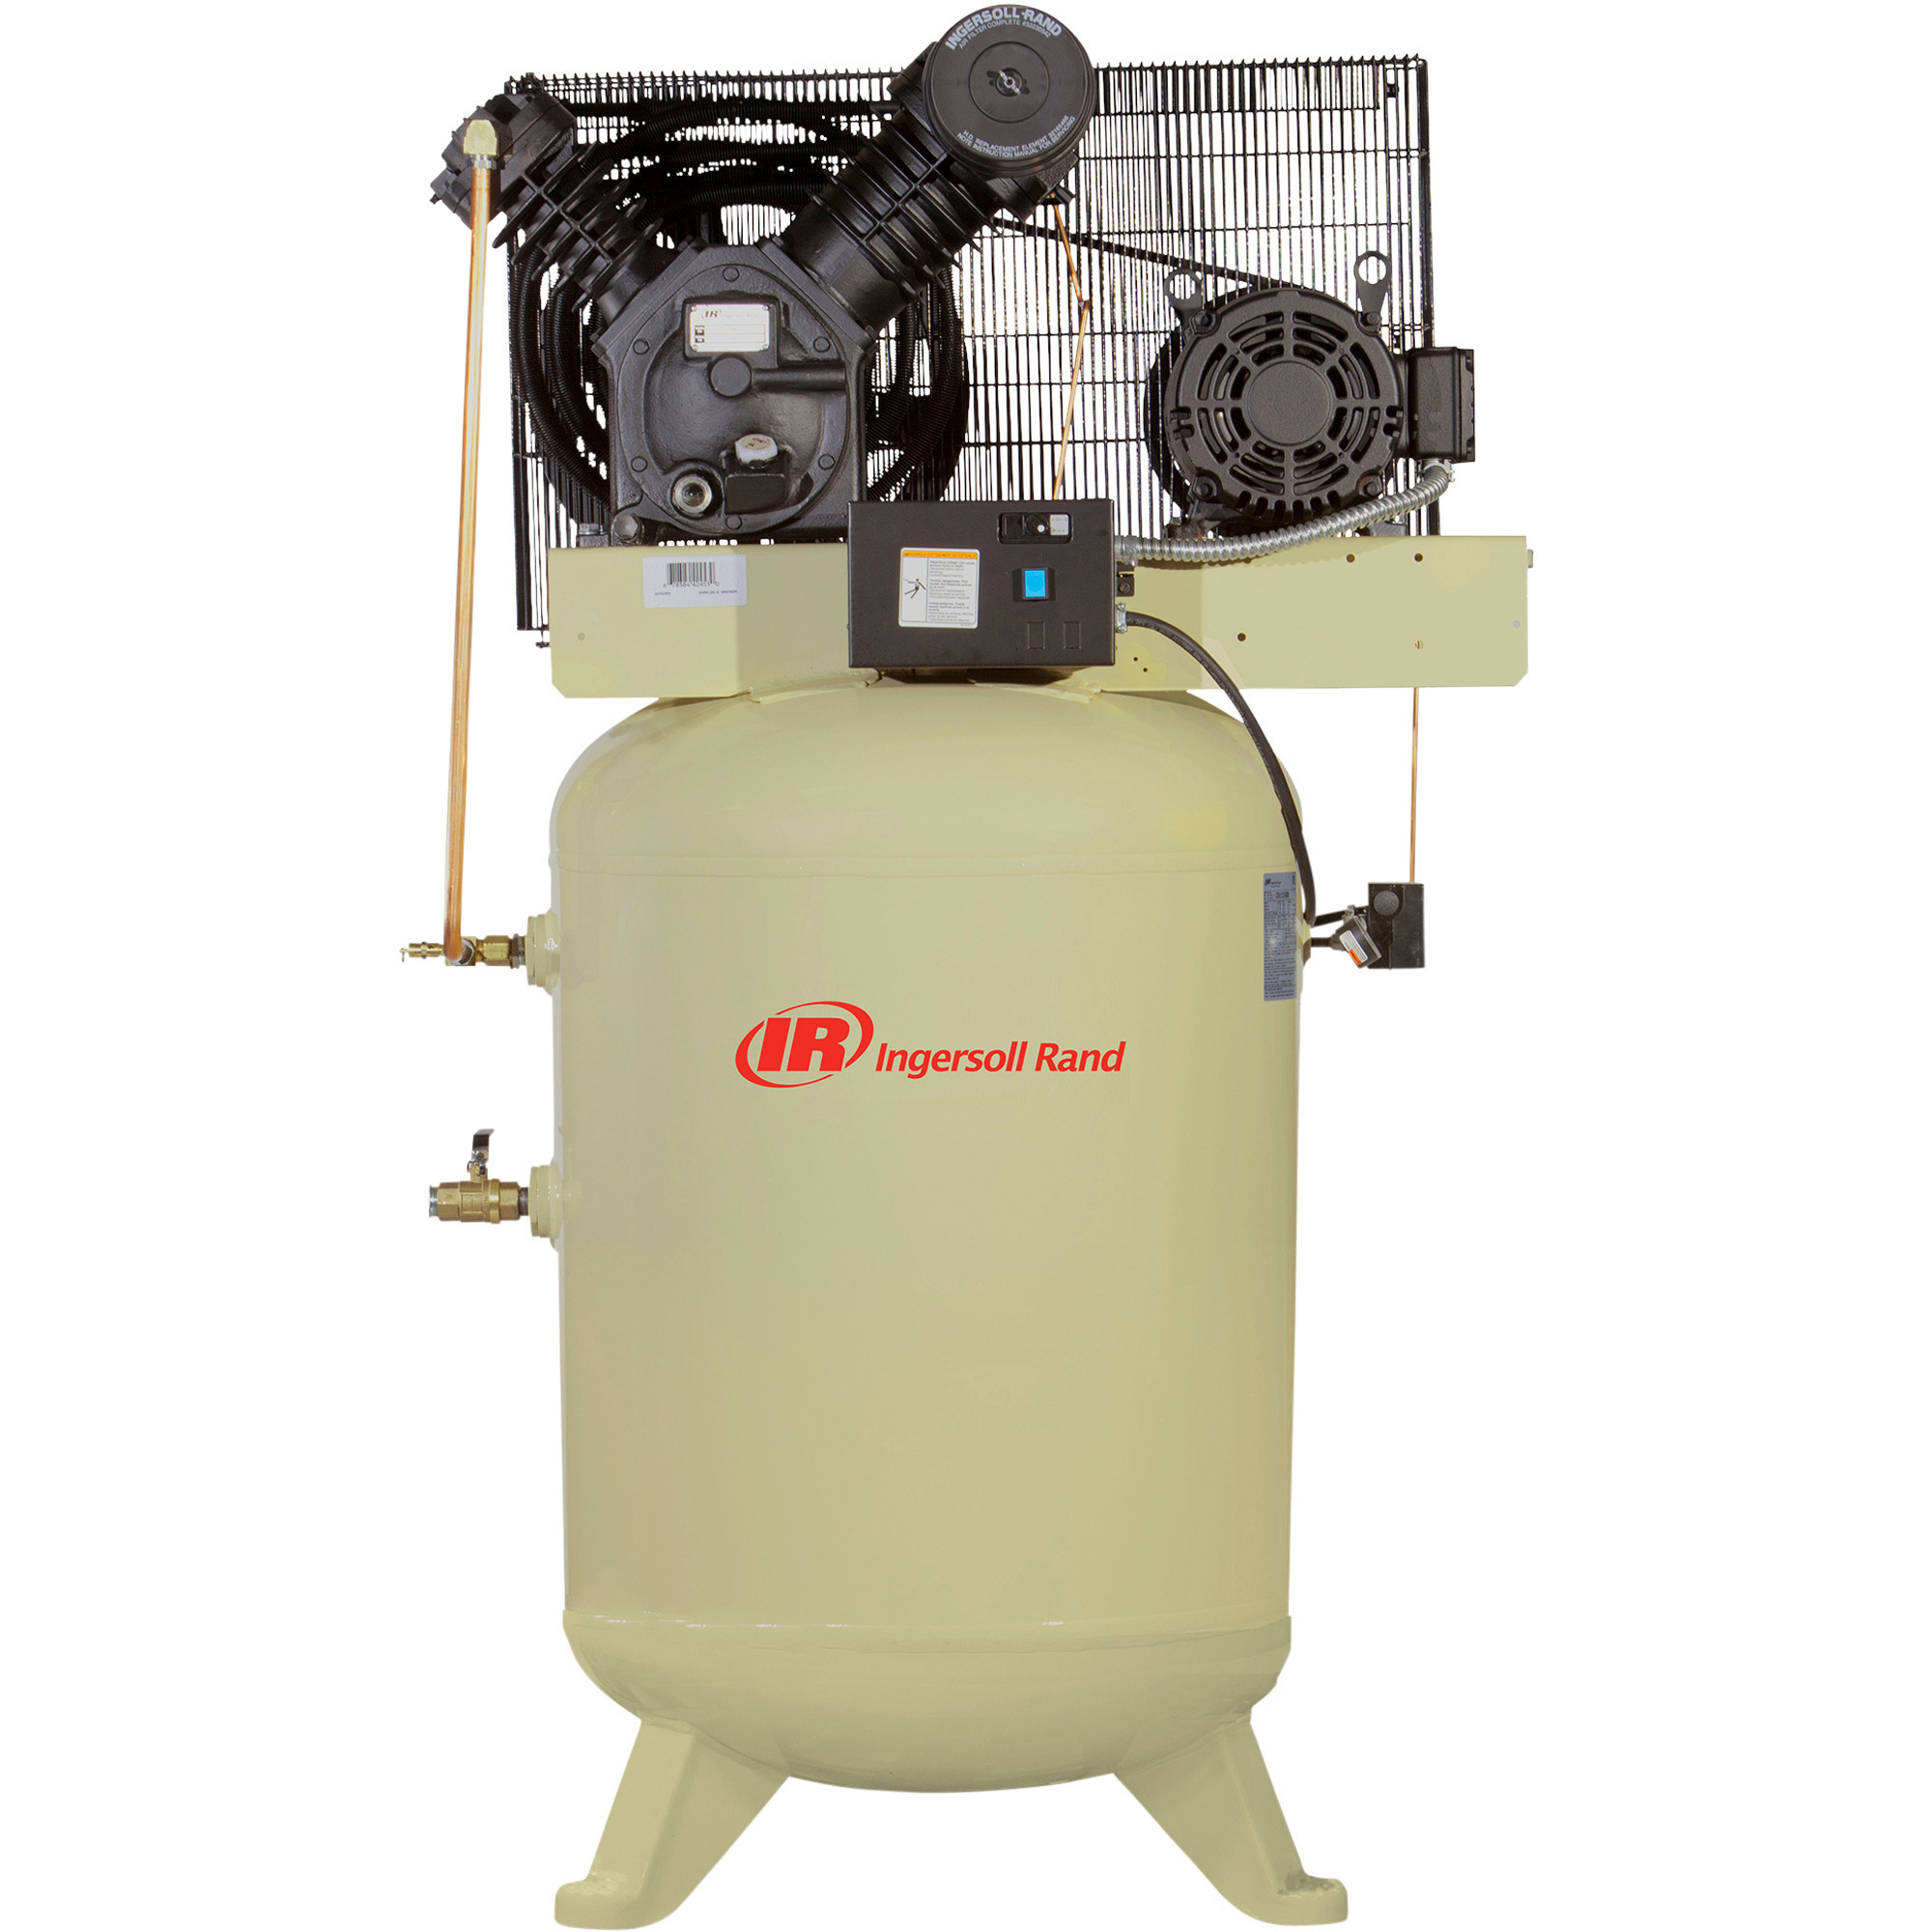 Ingersoll Rand Type-30 Reciprocating Air Compressor, 10 HP, 230 Volt, 3 Phase, 120 Gallon Vertical, Model 2545K10-V